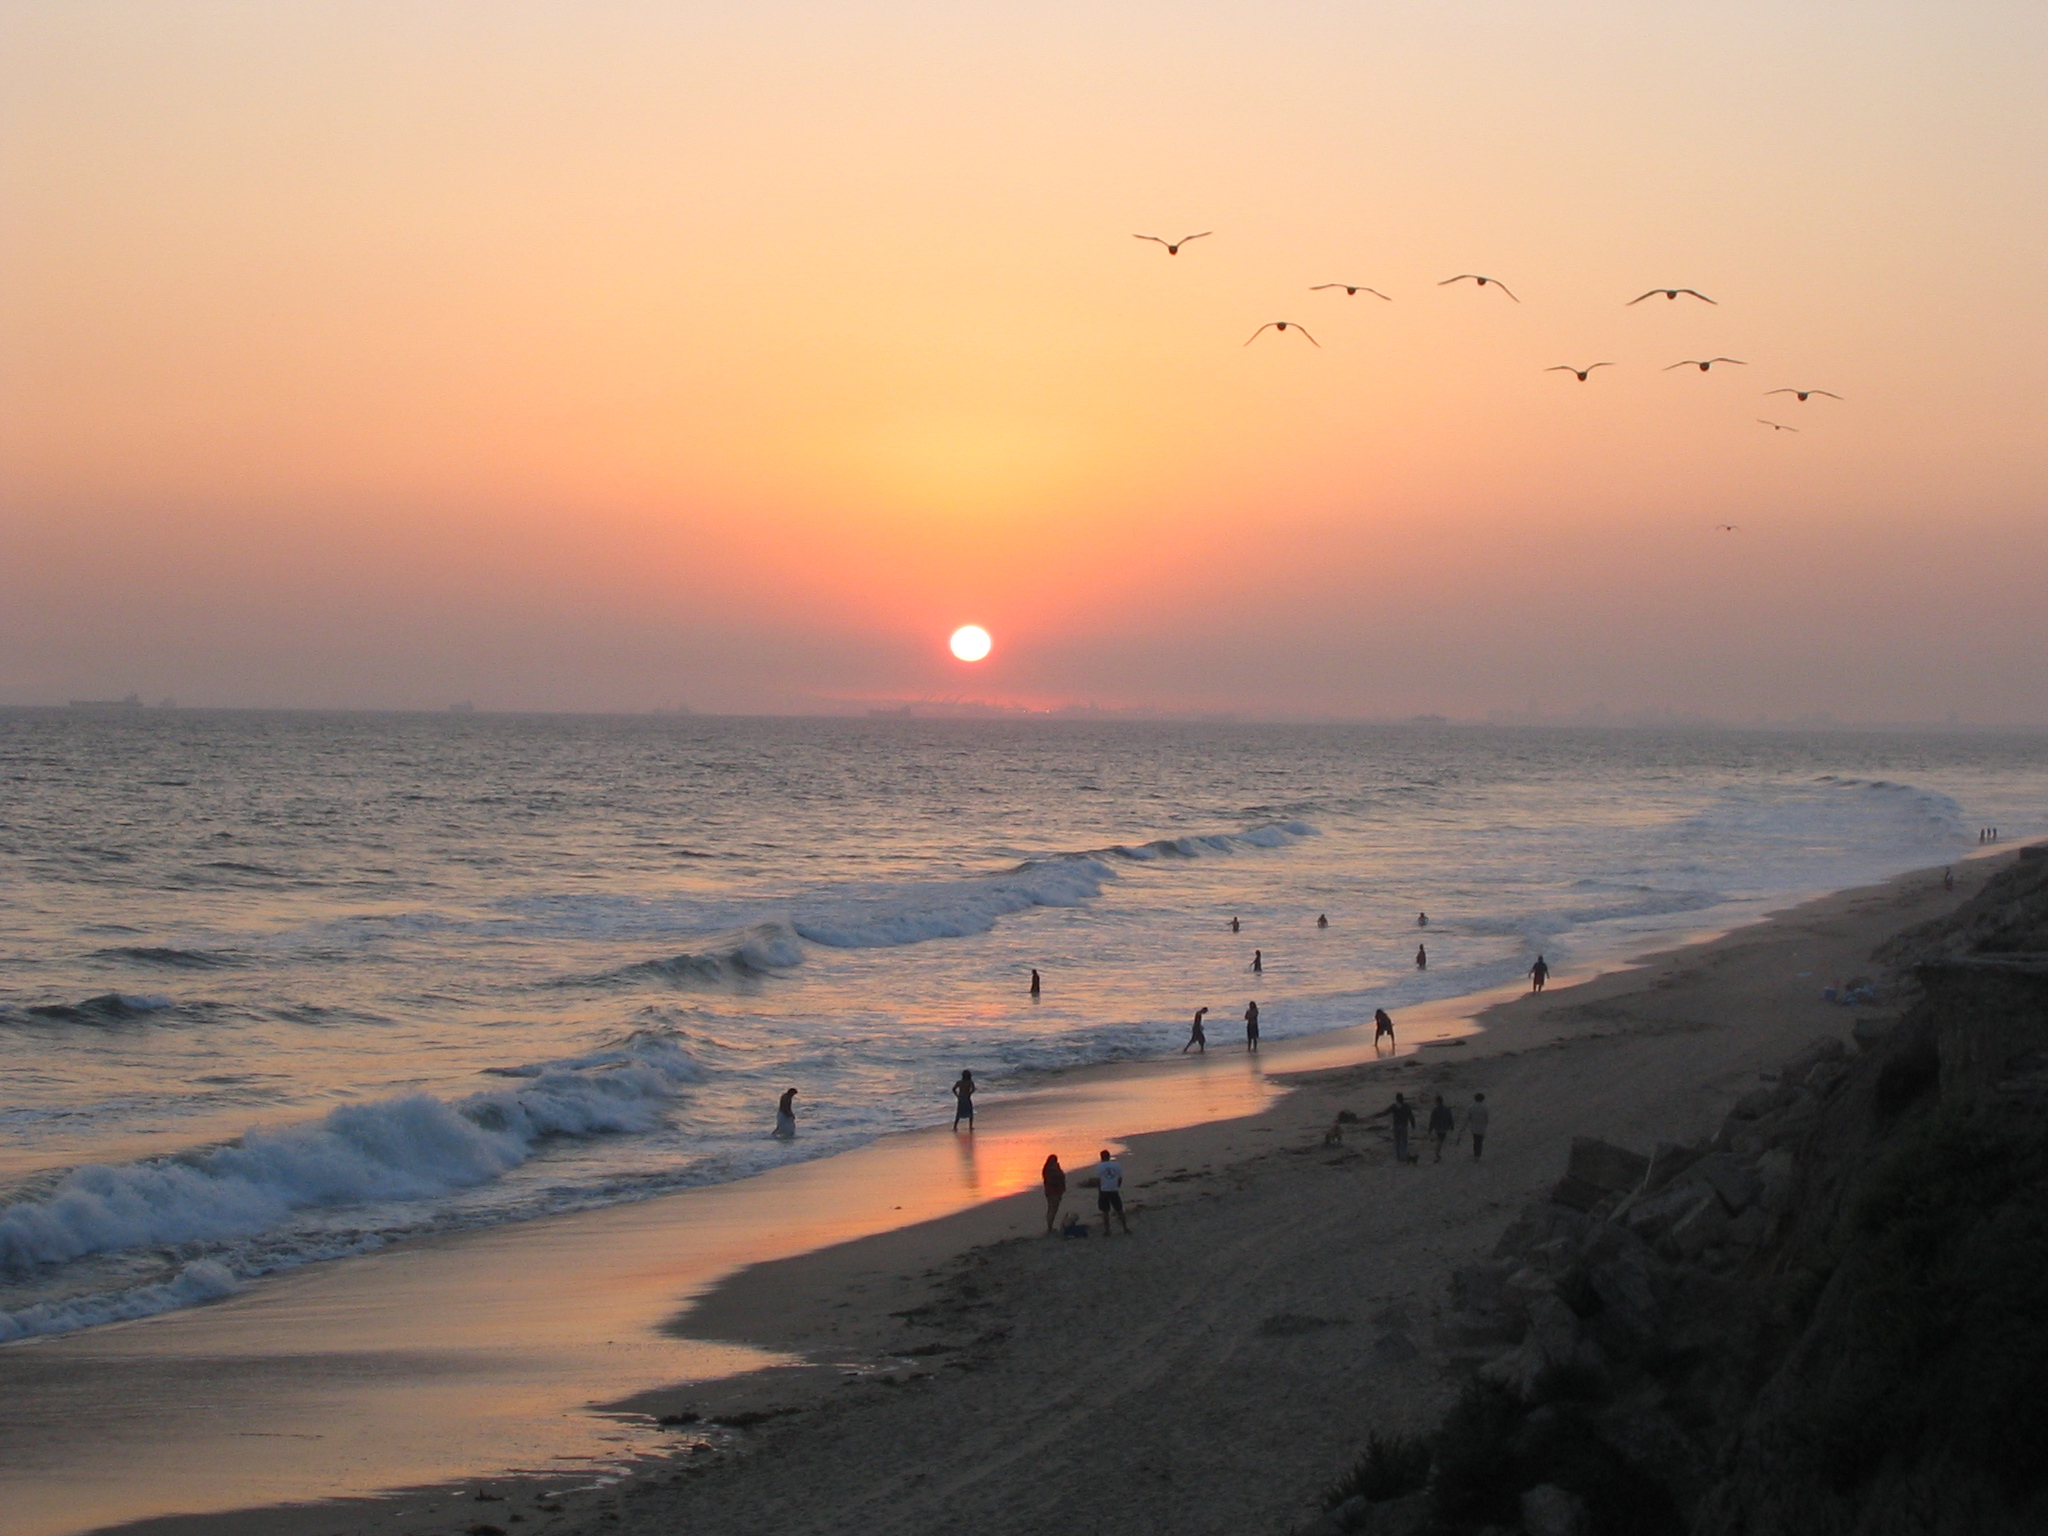 Huntington Beach at sunset